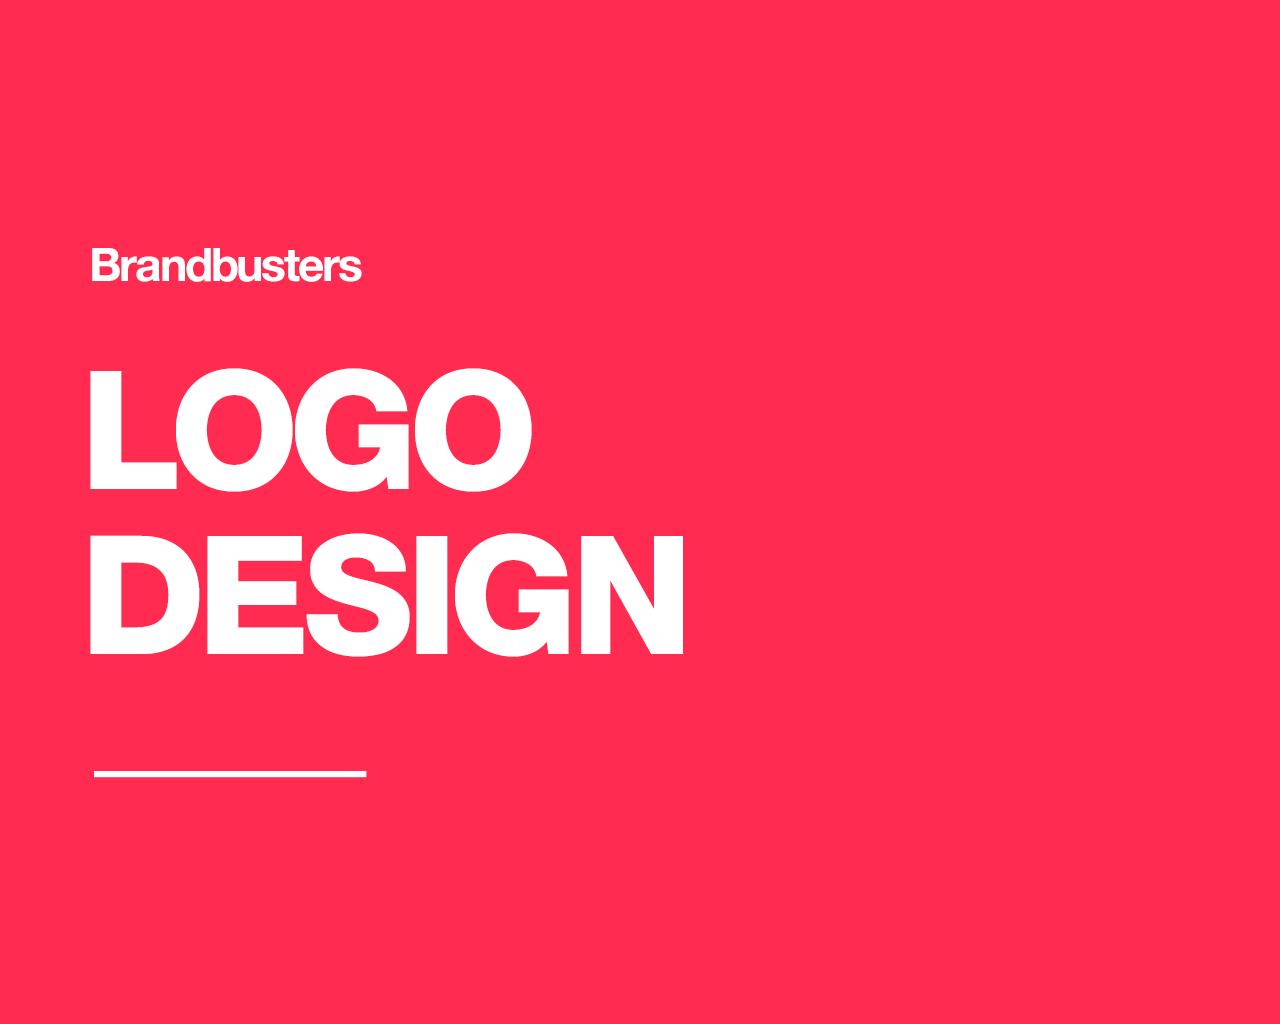 Studio Red Logo - Professional Logo Design by Brandbusters on Envato Studio